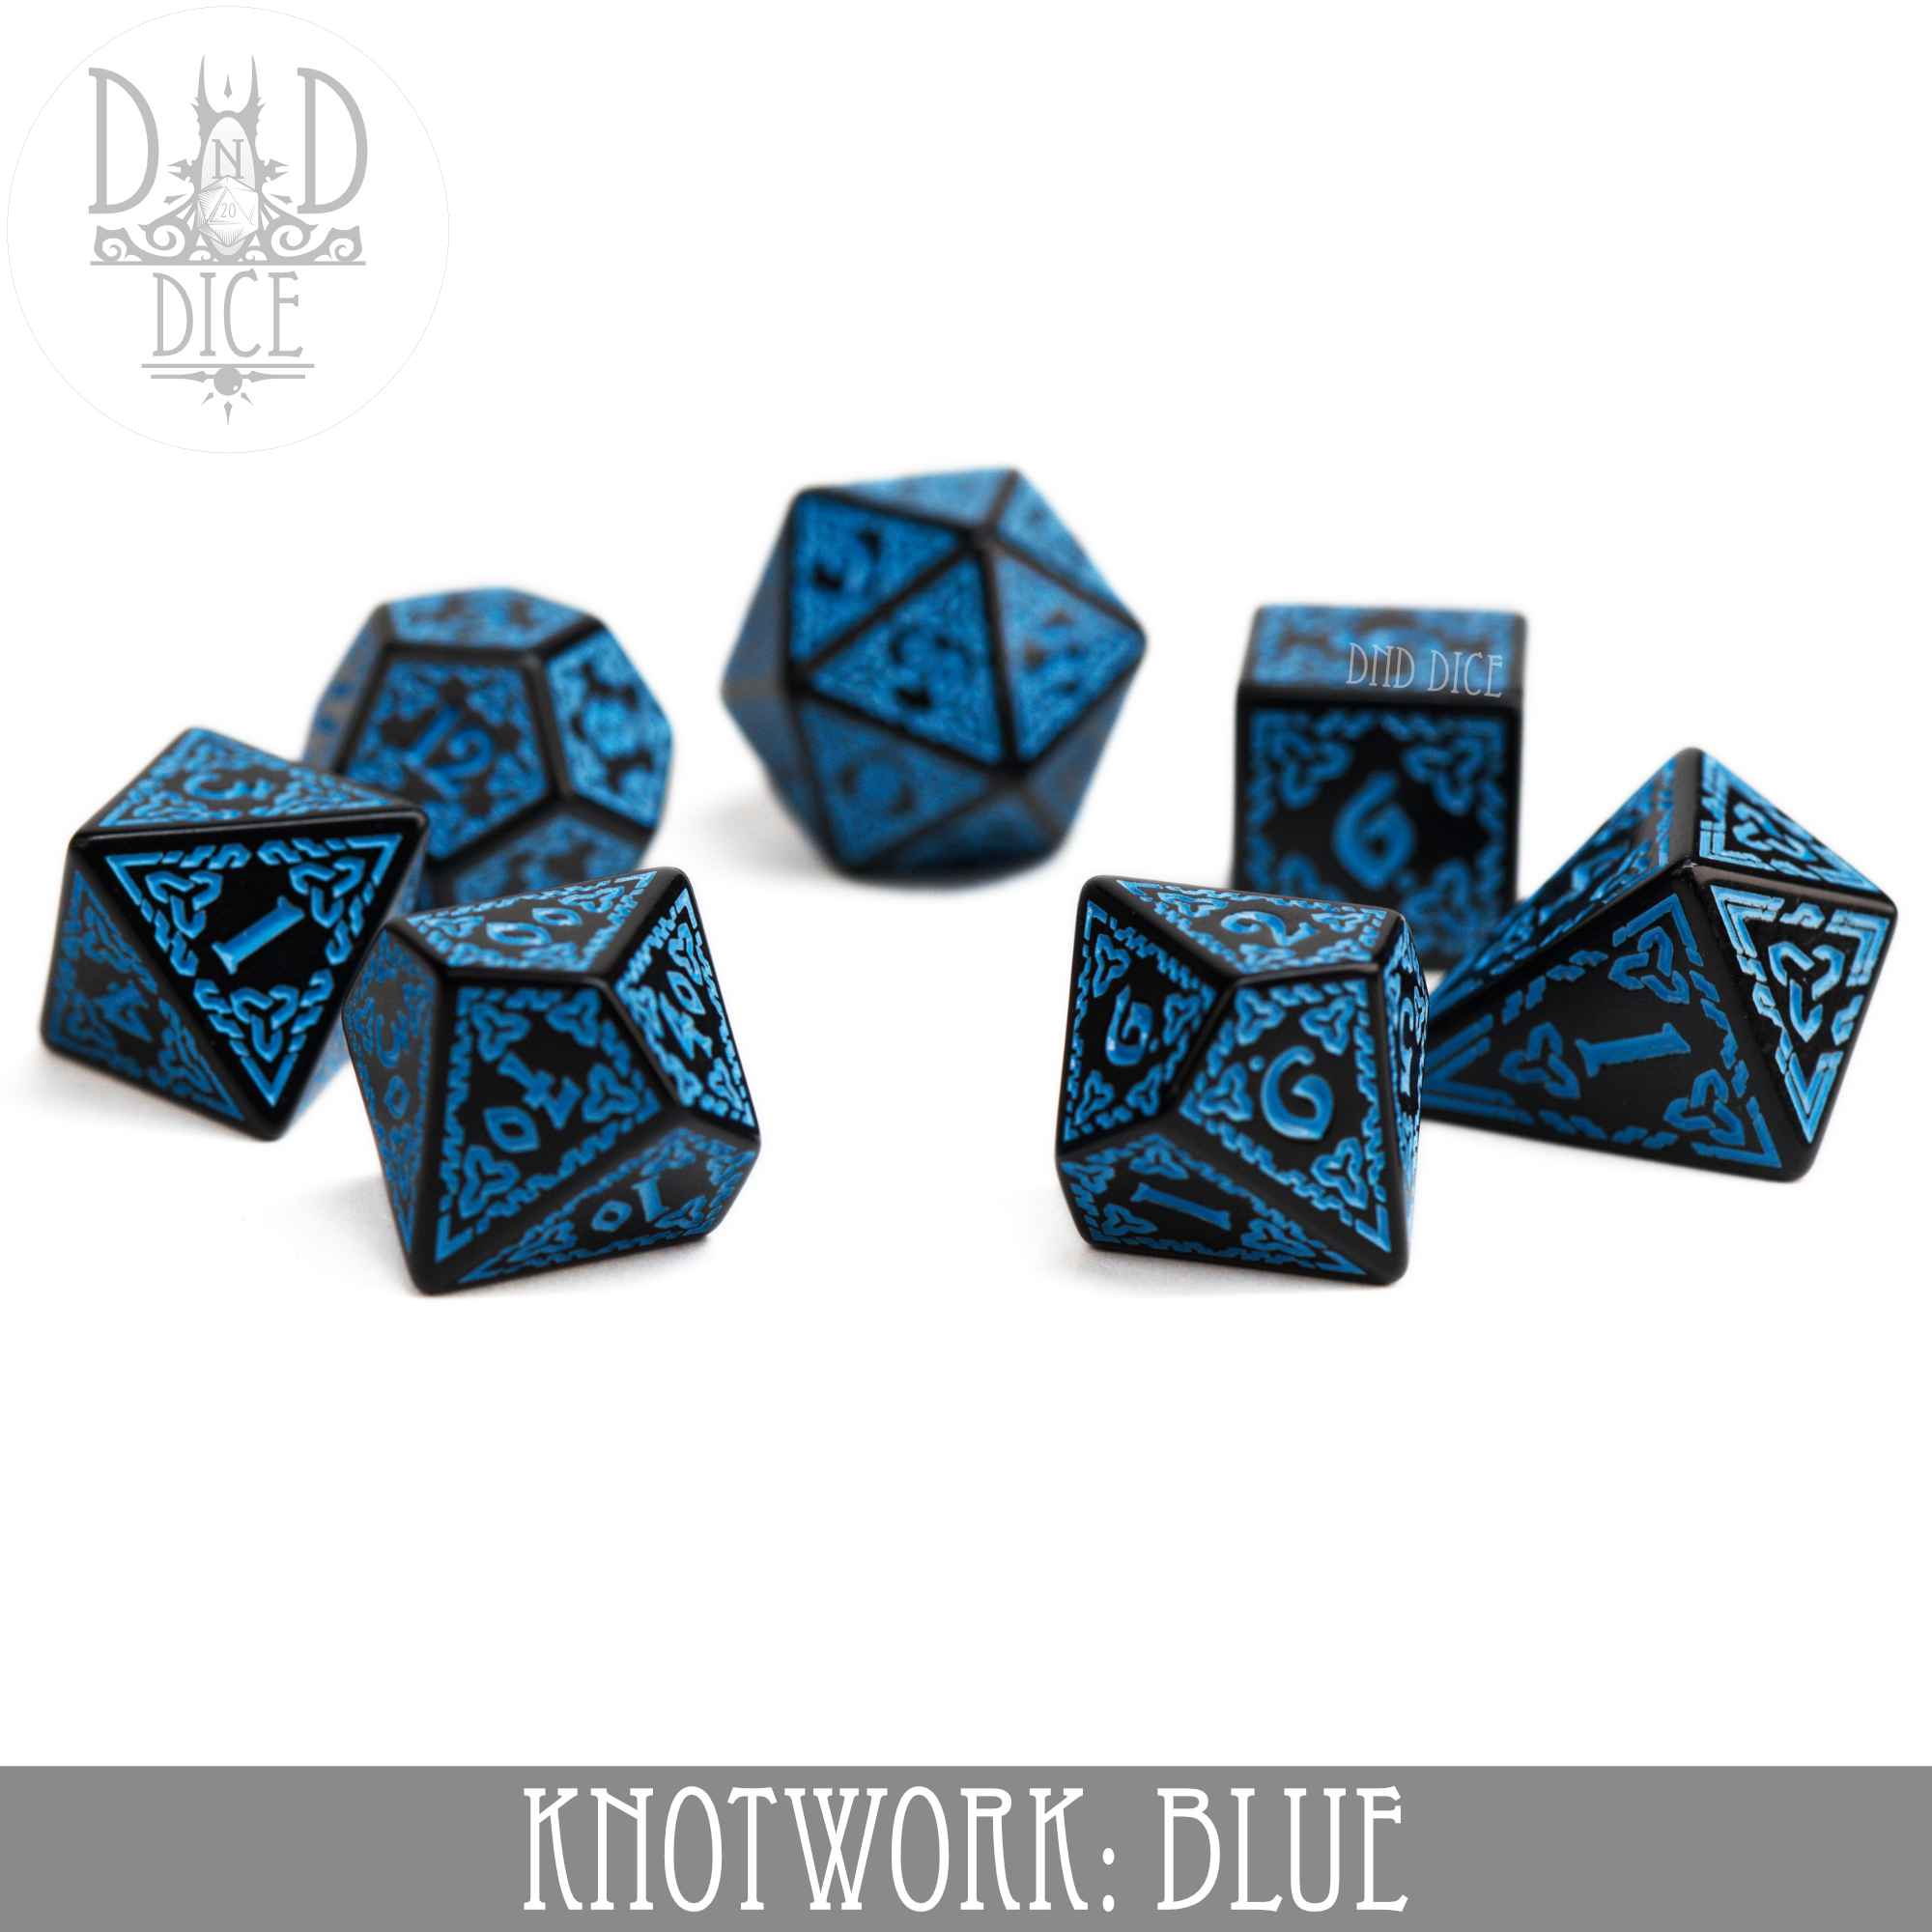 Knotwork: Blue Dice Set